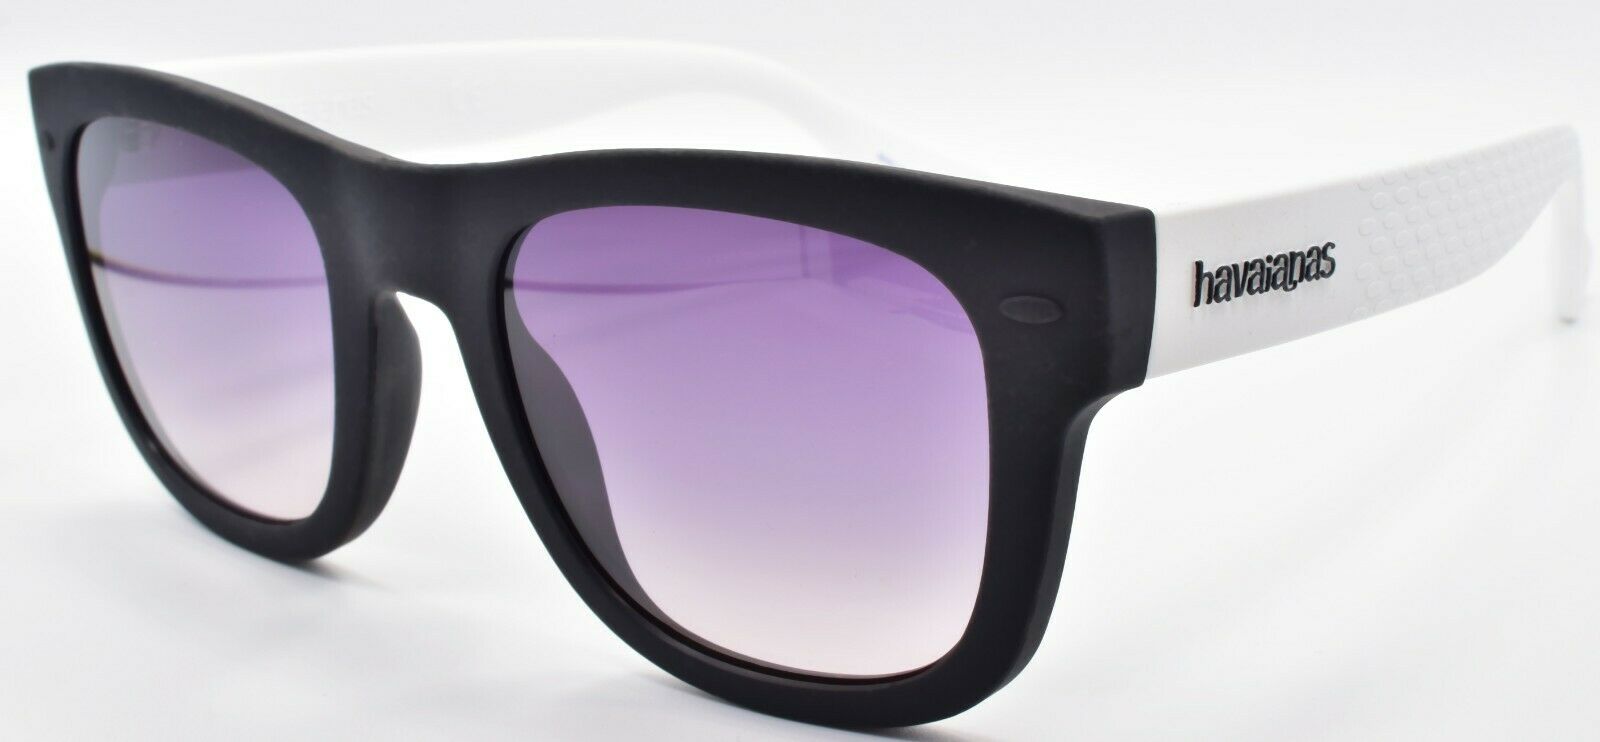 1-Havaianas Paraty /L R0TLS Men's Sunglasses 52-22-150 Black & White / Smoke-762753123510-IKSpecs